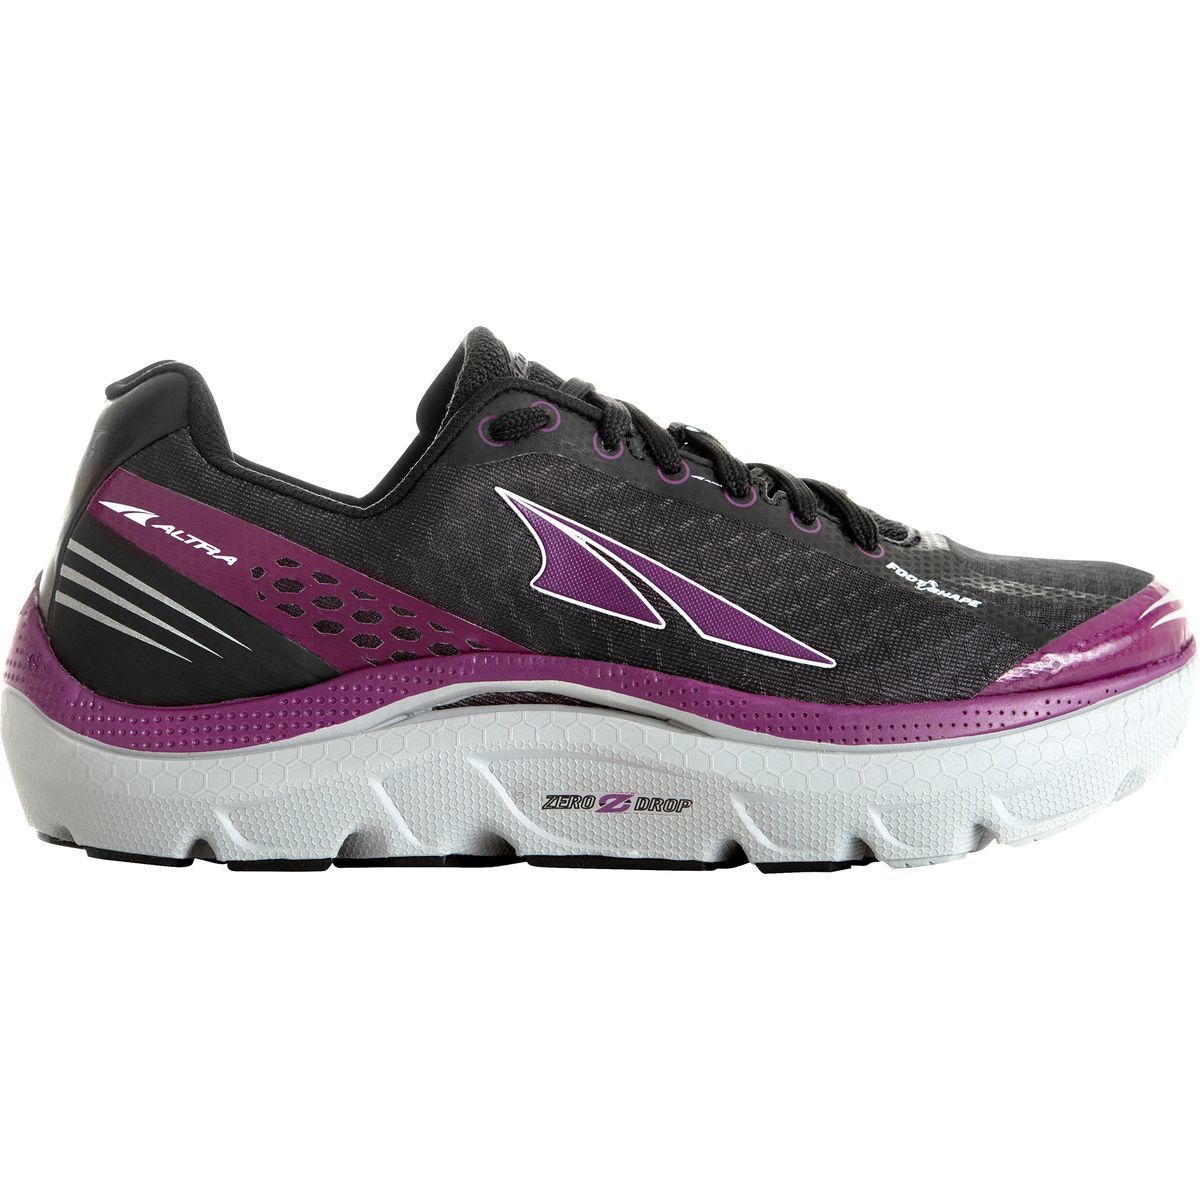 Altra Paradigm 2.0 Running Shoe - Women's | eBay